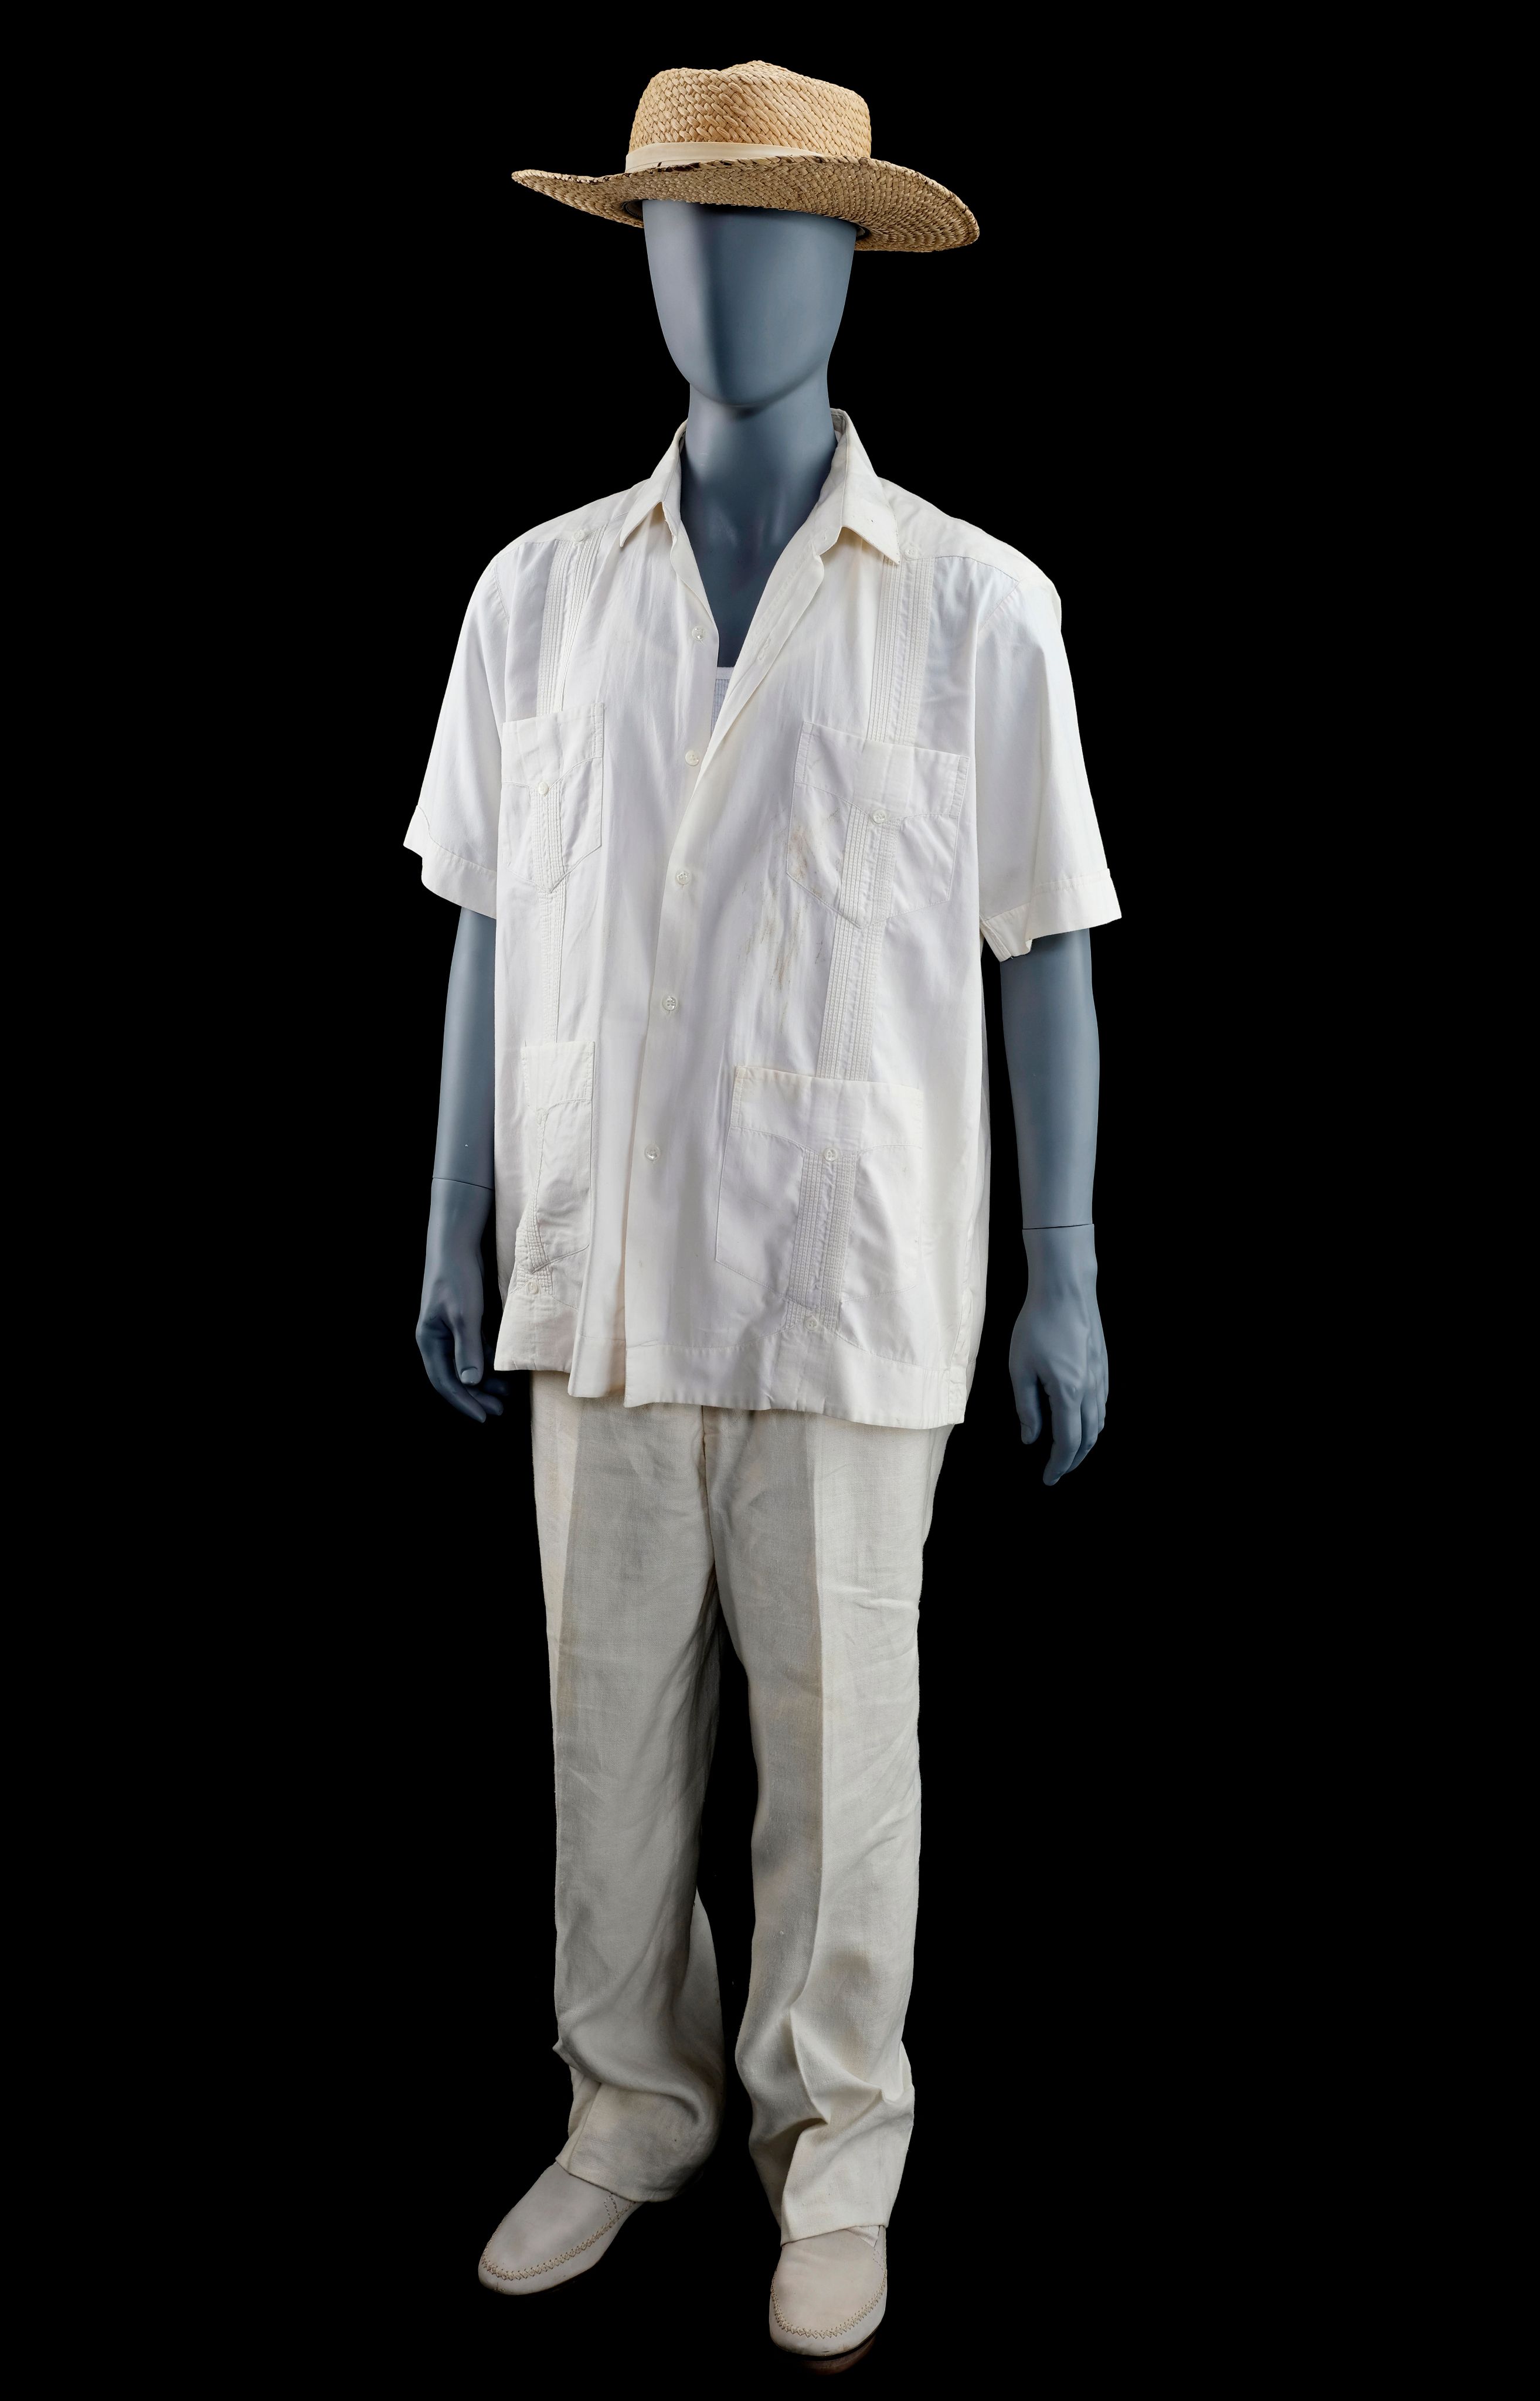 John Hammond clothes from Jurassic Park prop